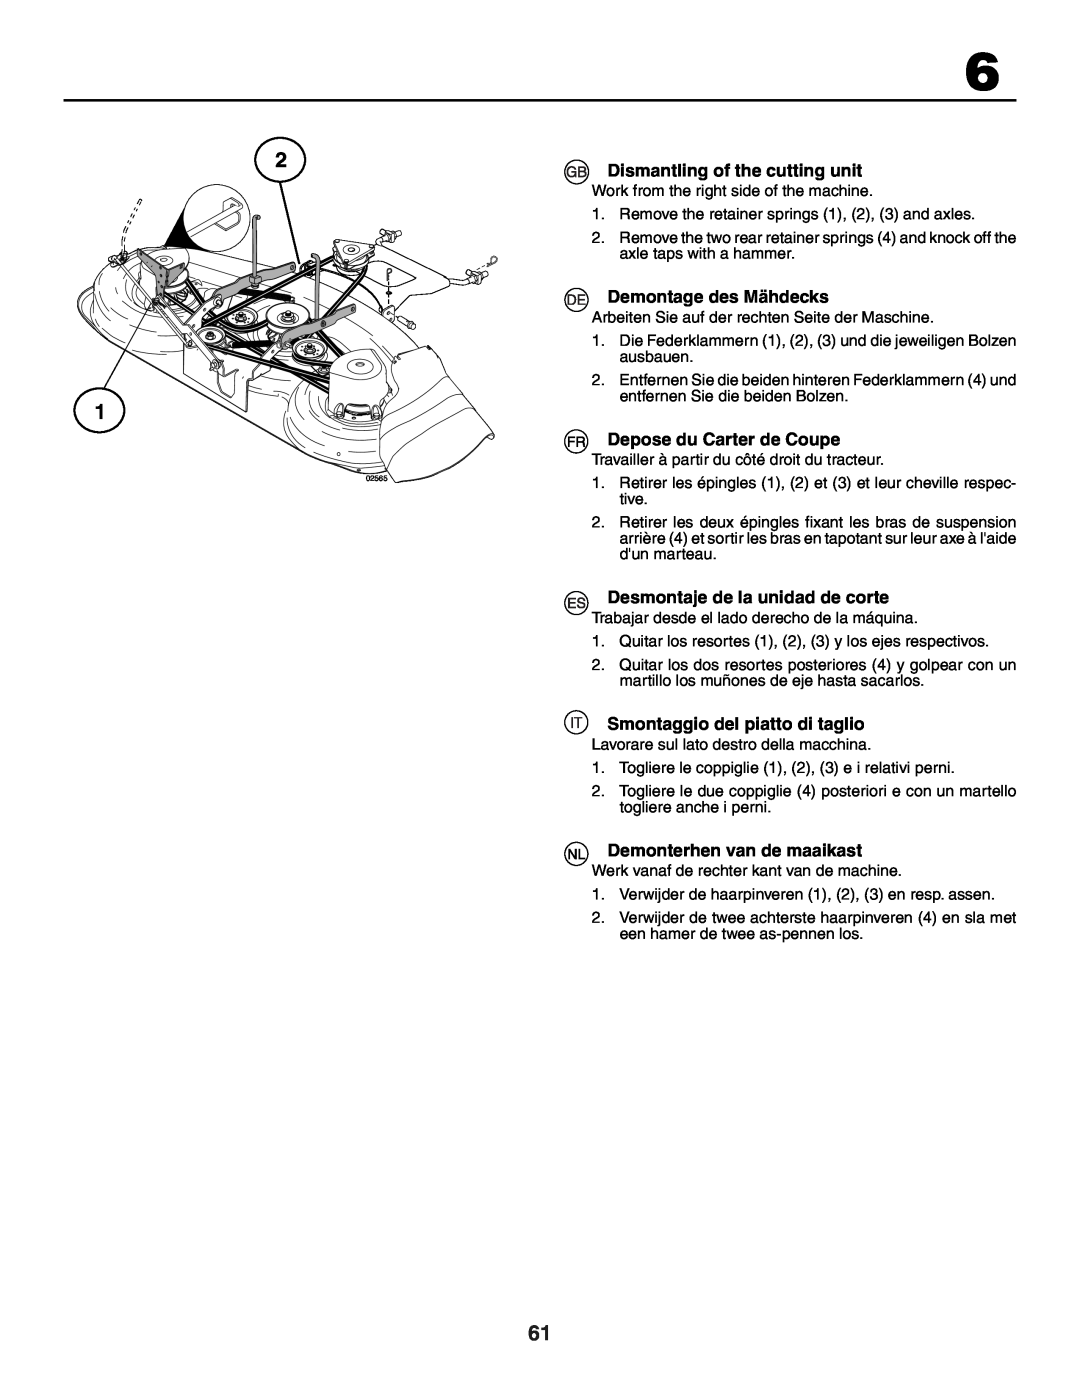 Husqvarna GTH250XP instruction manual Dismantling of the cutting unit, Demontage des Mähdecks, Depose du Carter de Coupe 